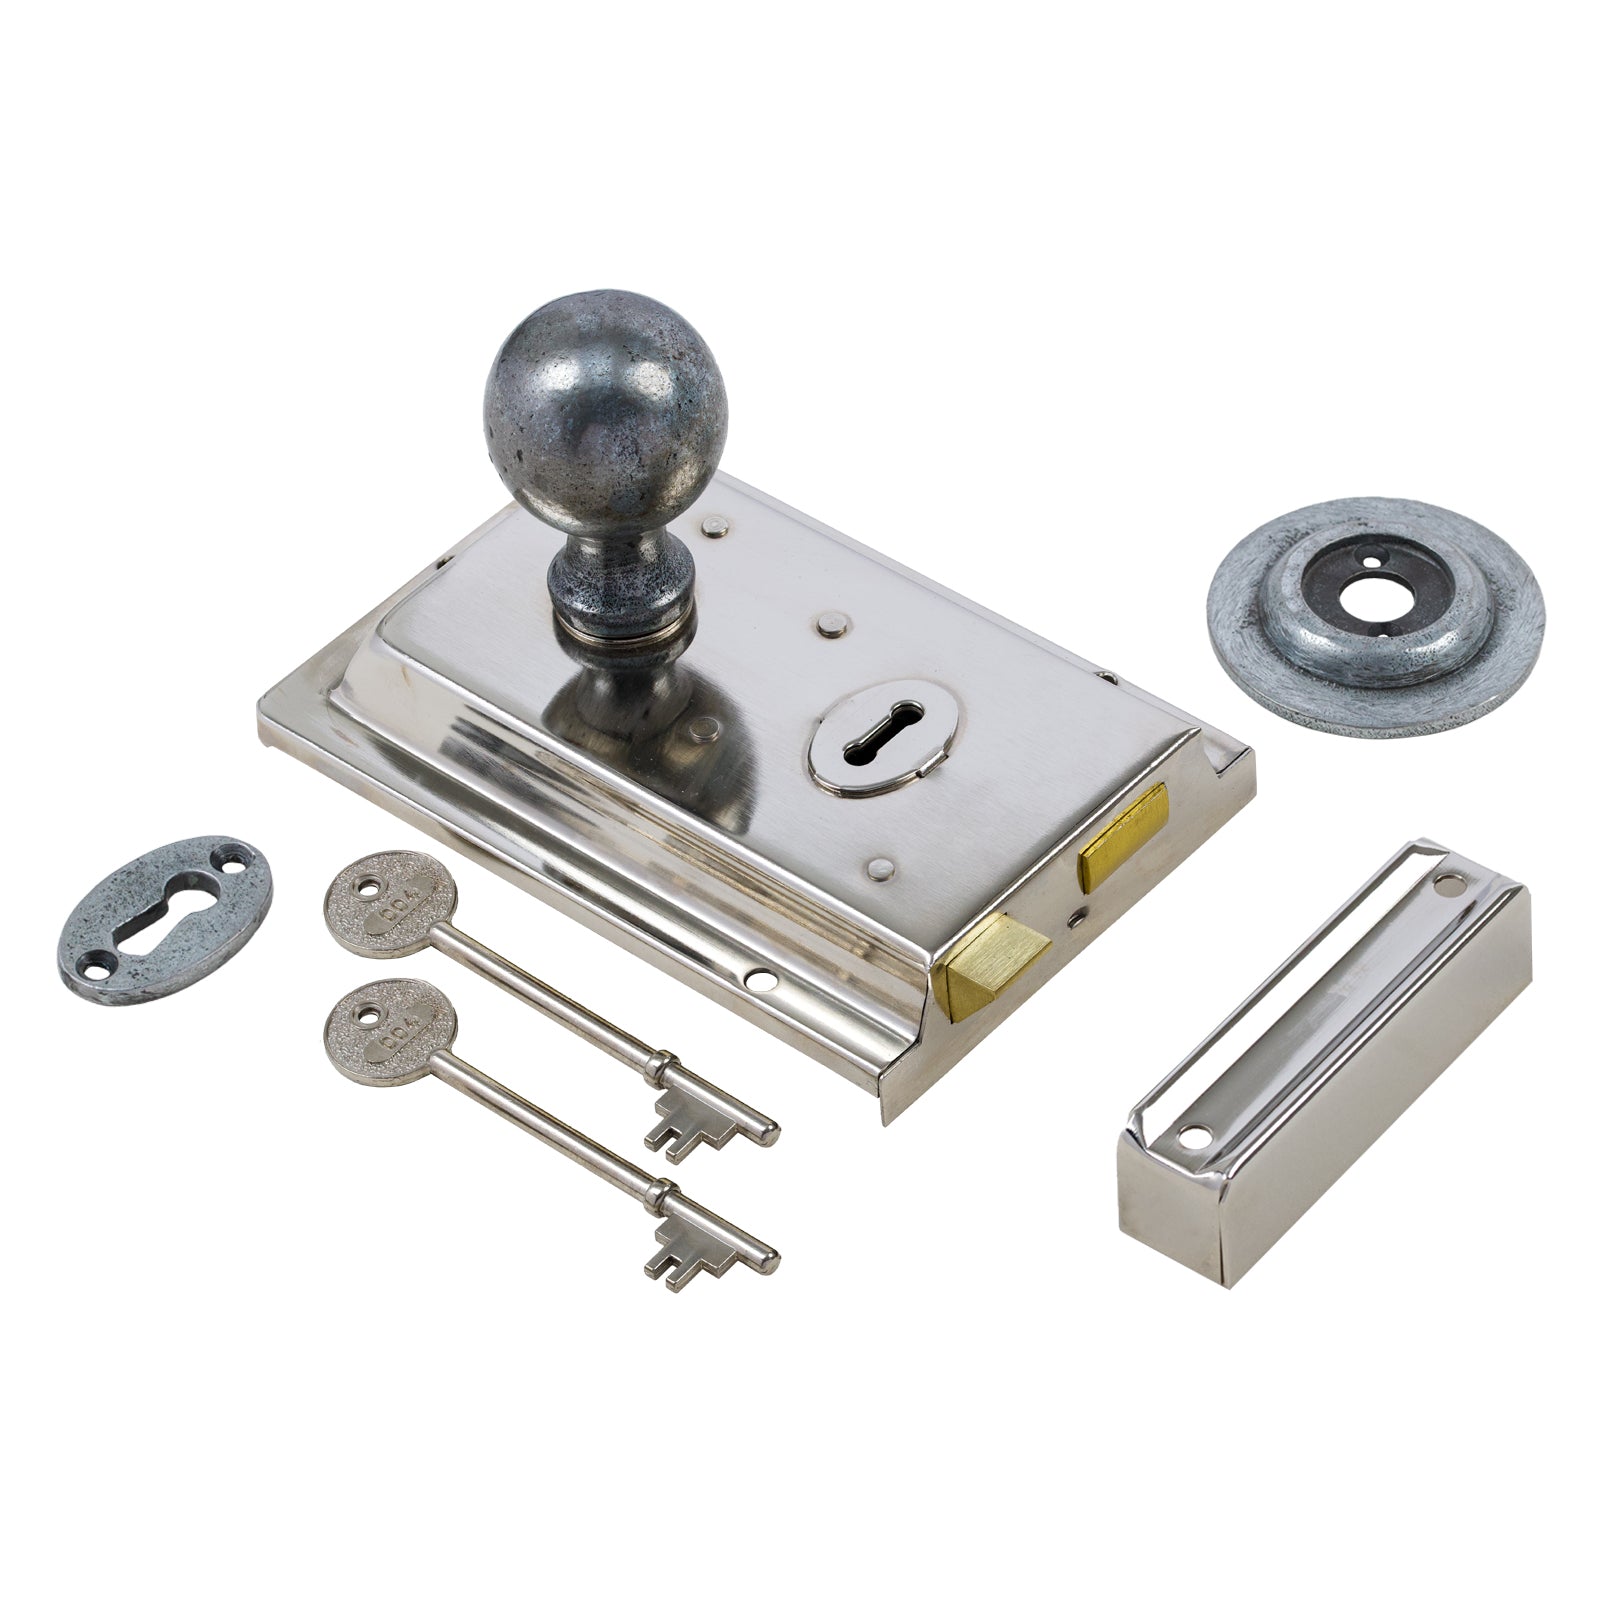 SHOW Round Door Knob Set - Pewter On Polished Nickel Rim Lock